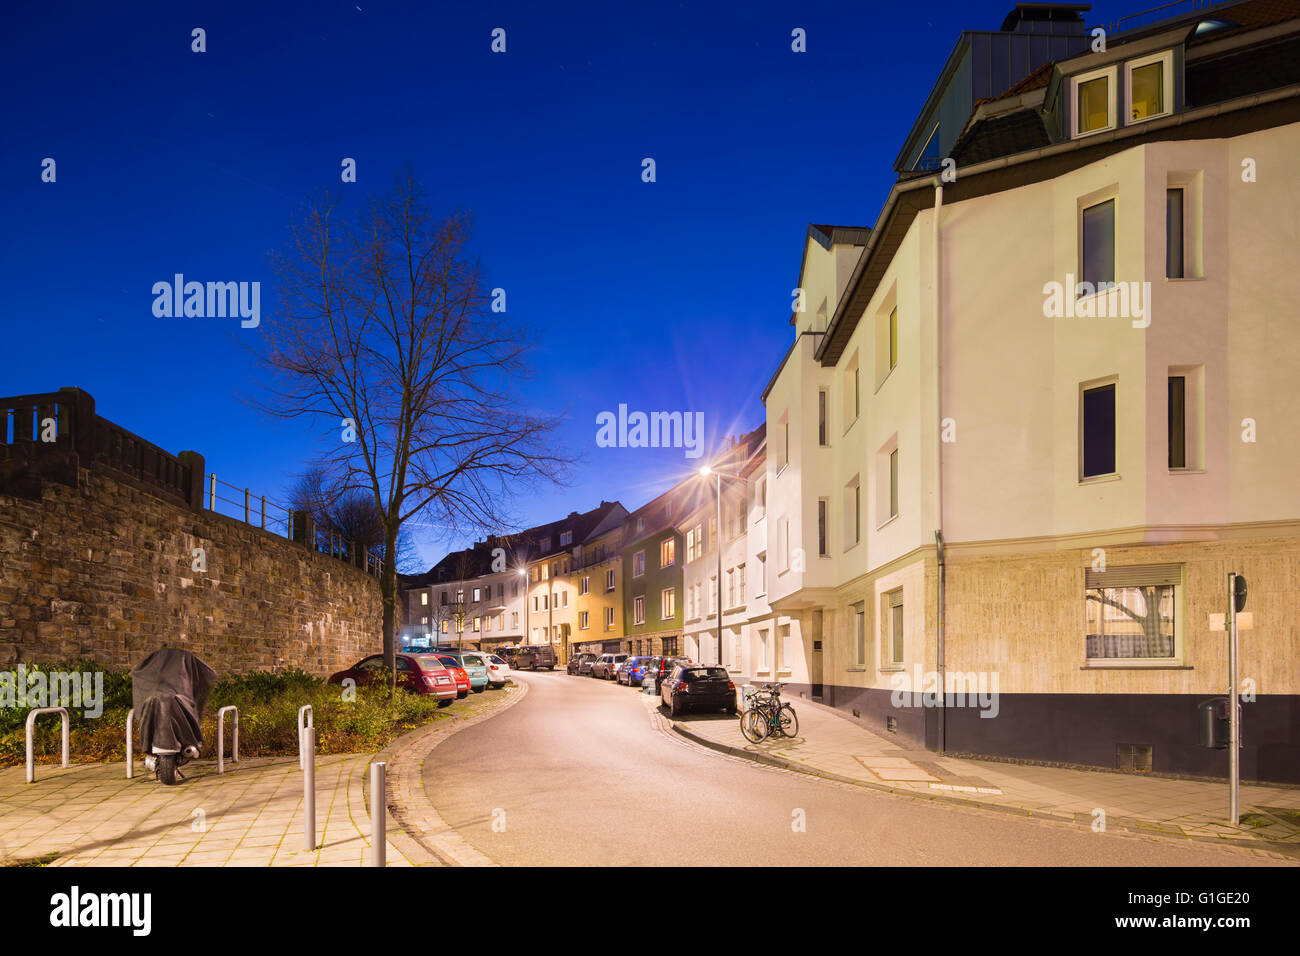 A city street in Aachen Burtscheid, Germany with night blue sky. Stock Photo